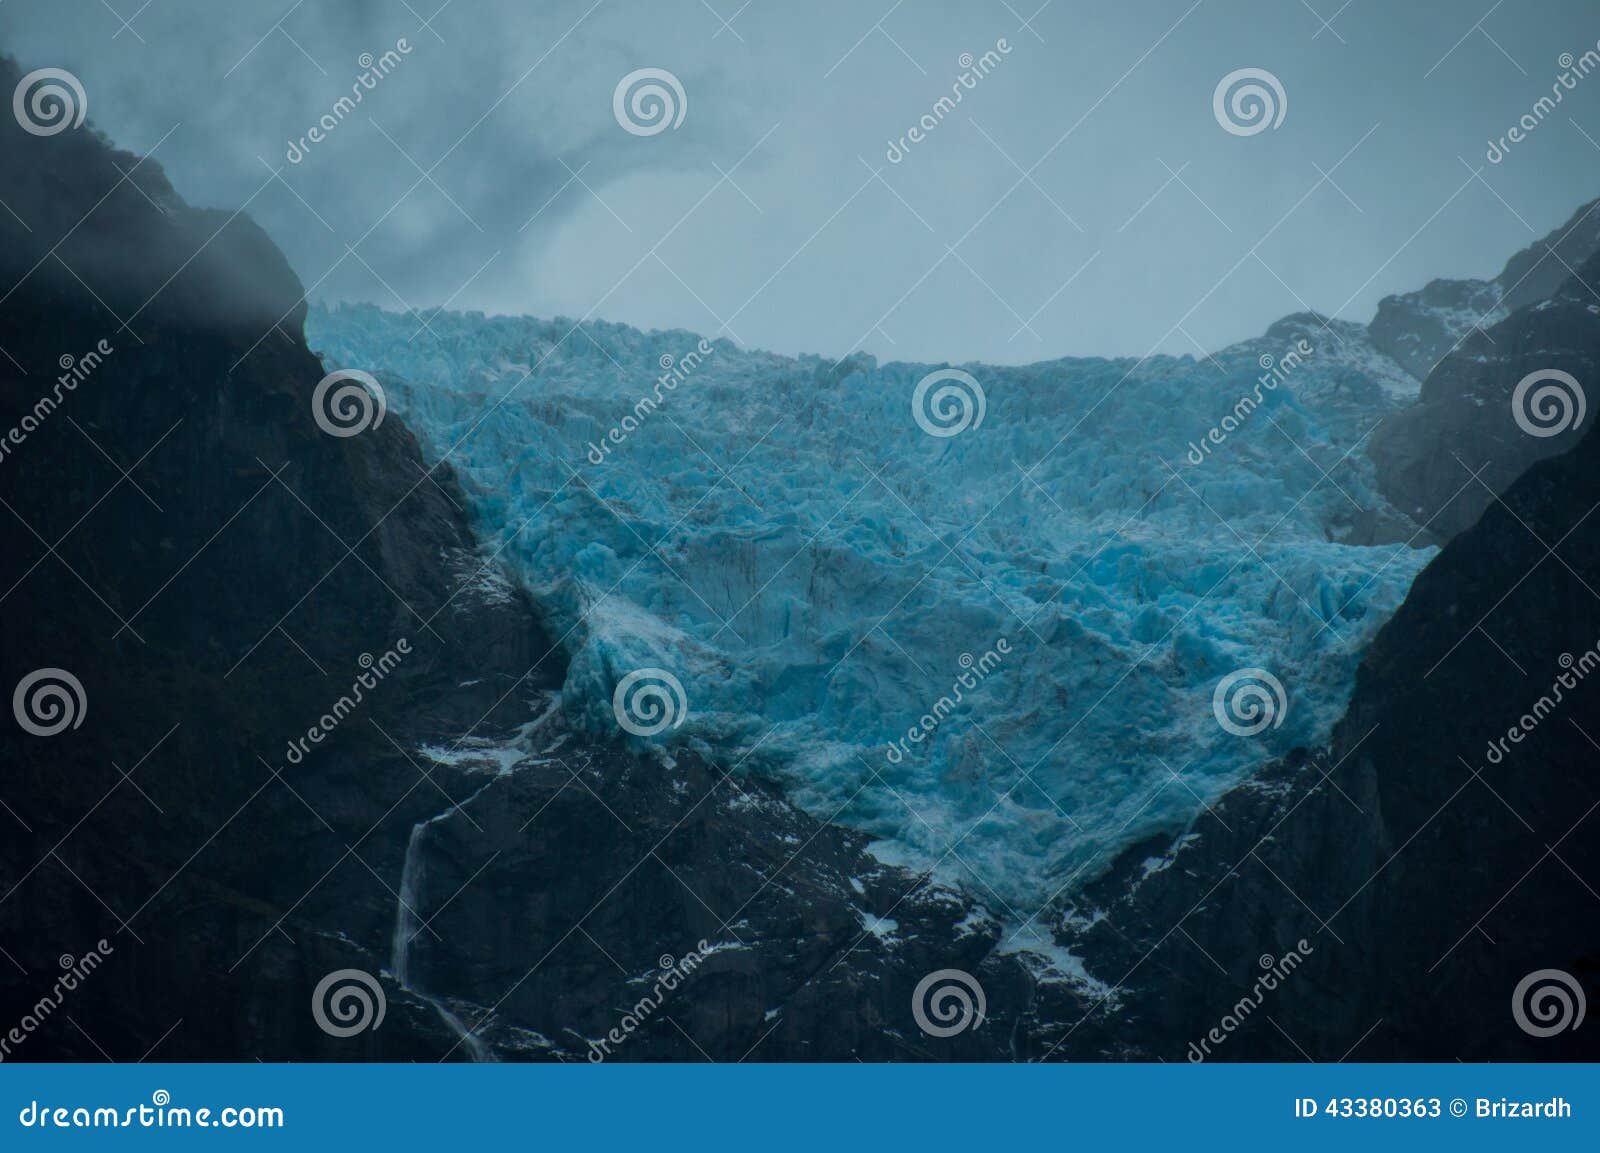 ventisquero glacier, parque nacional of queulat, carretera austral, highway 7, chile